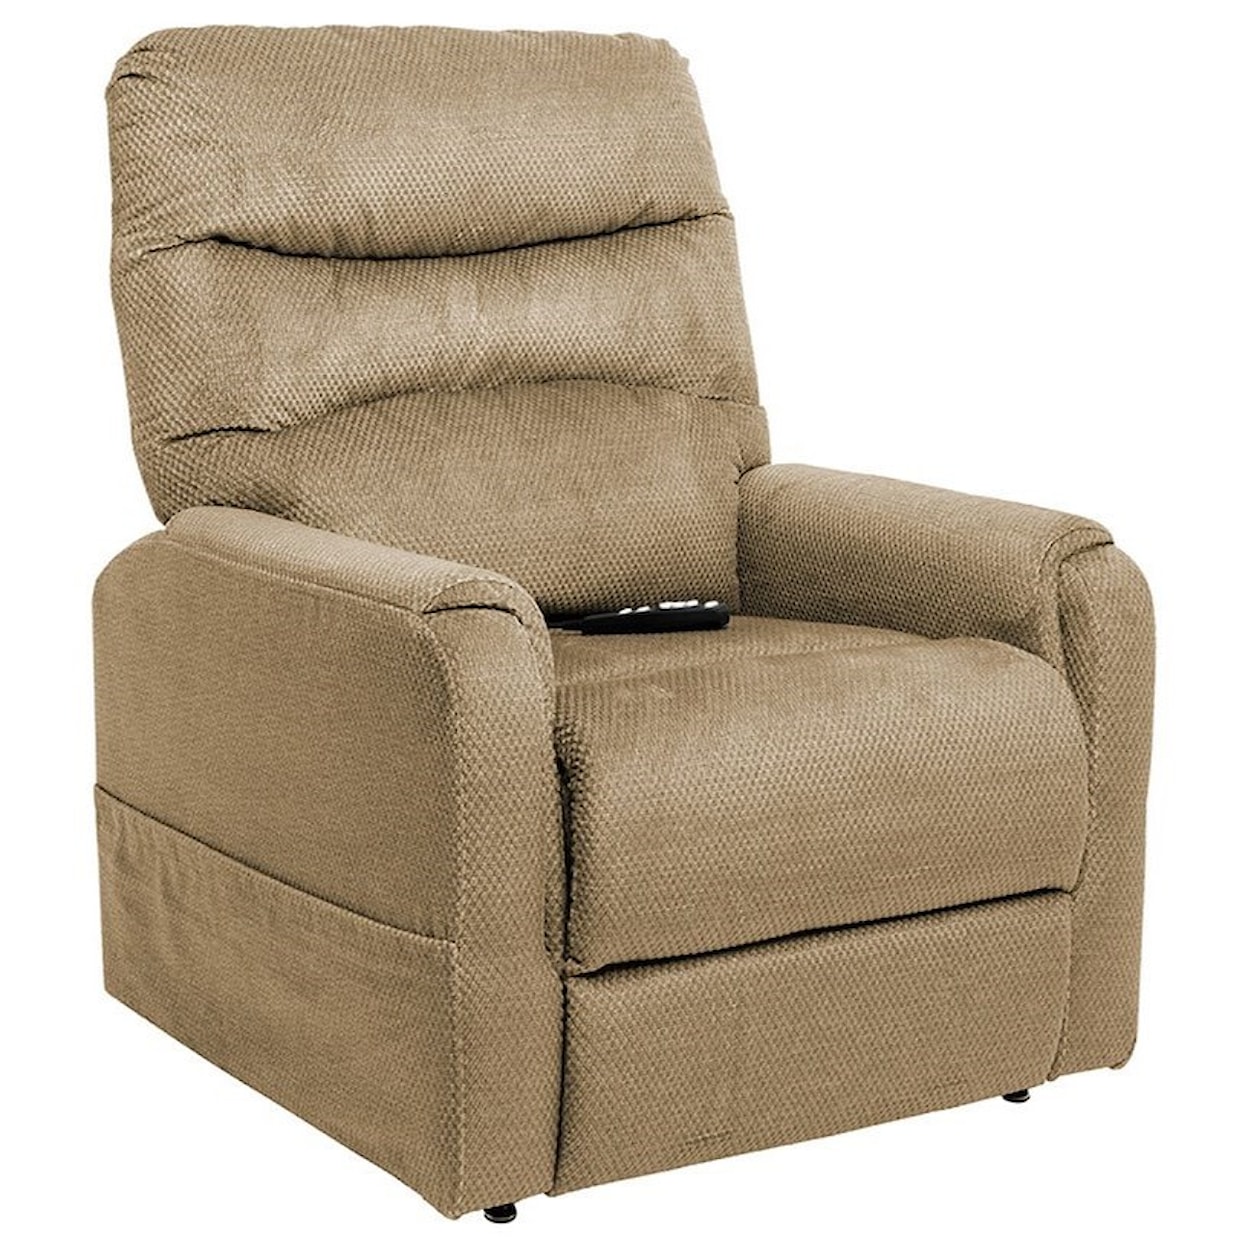 Windermere Motion Lift Chairs Lift Chair Recliner w/ Heat & Massage